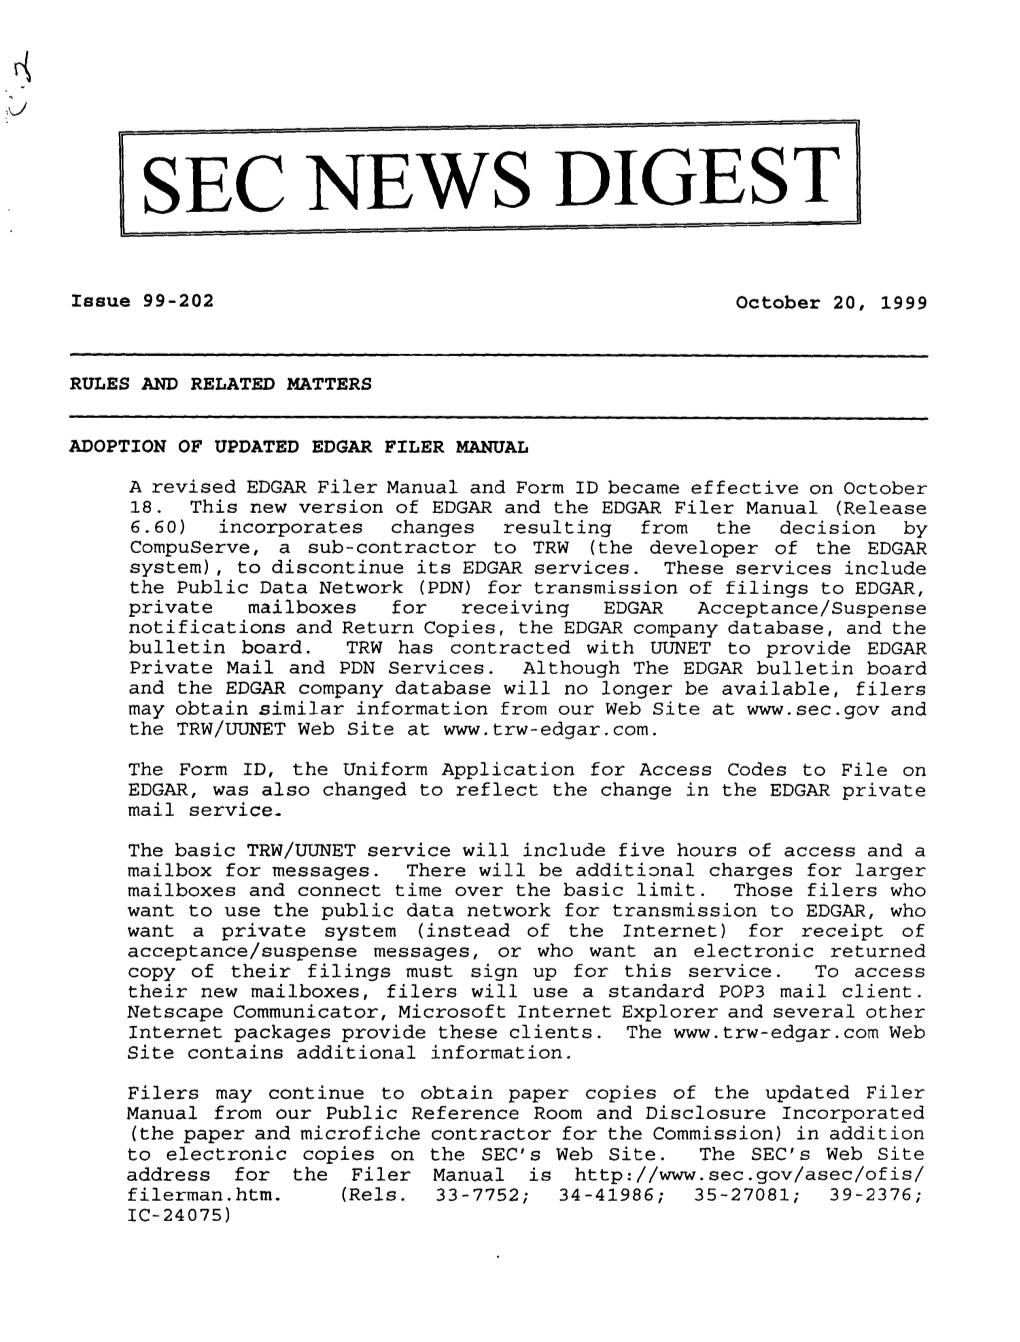 SEC News Digest, 10-20-1999